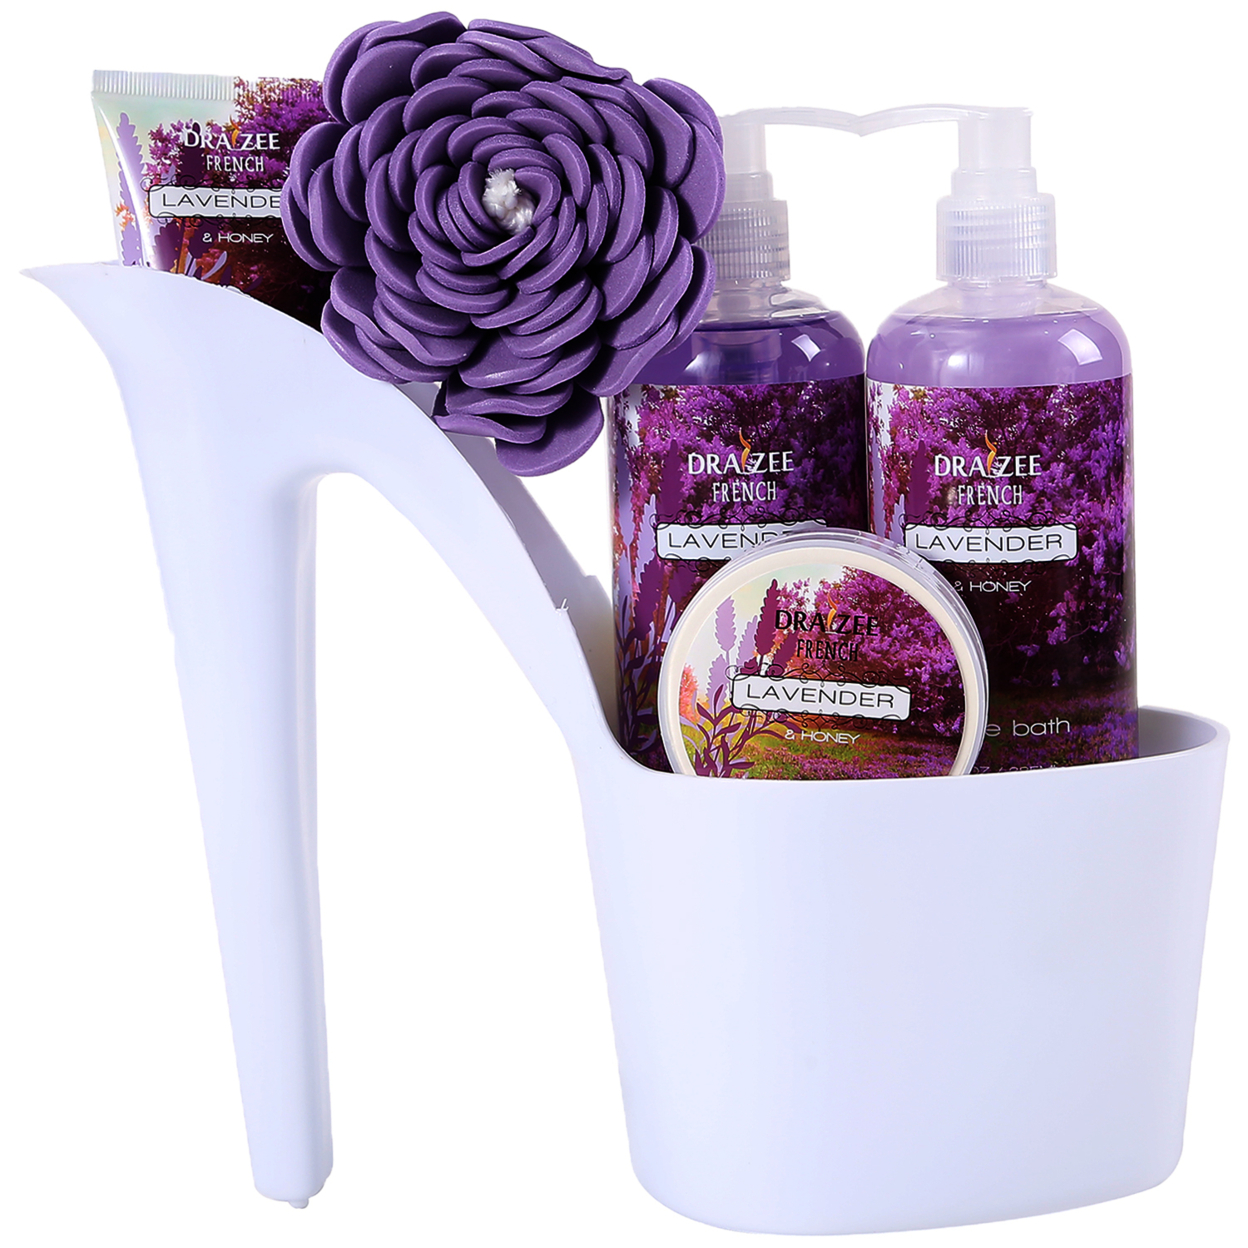 Draizee Heel Shoe Spa Gift Set Lavender Scented Bath Essentials Gift Basket W/ Gel, Bubble Bath, Body Butter, Lotion & Soft EVA Bath Puff